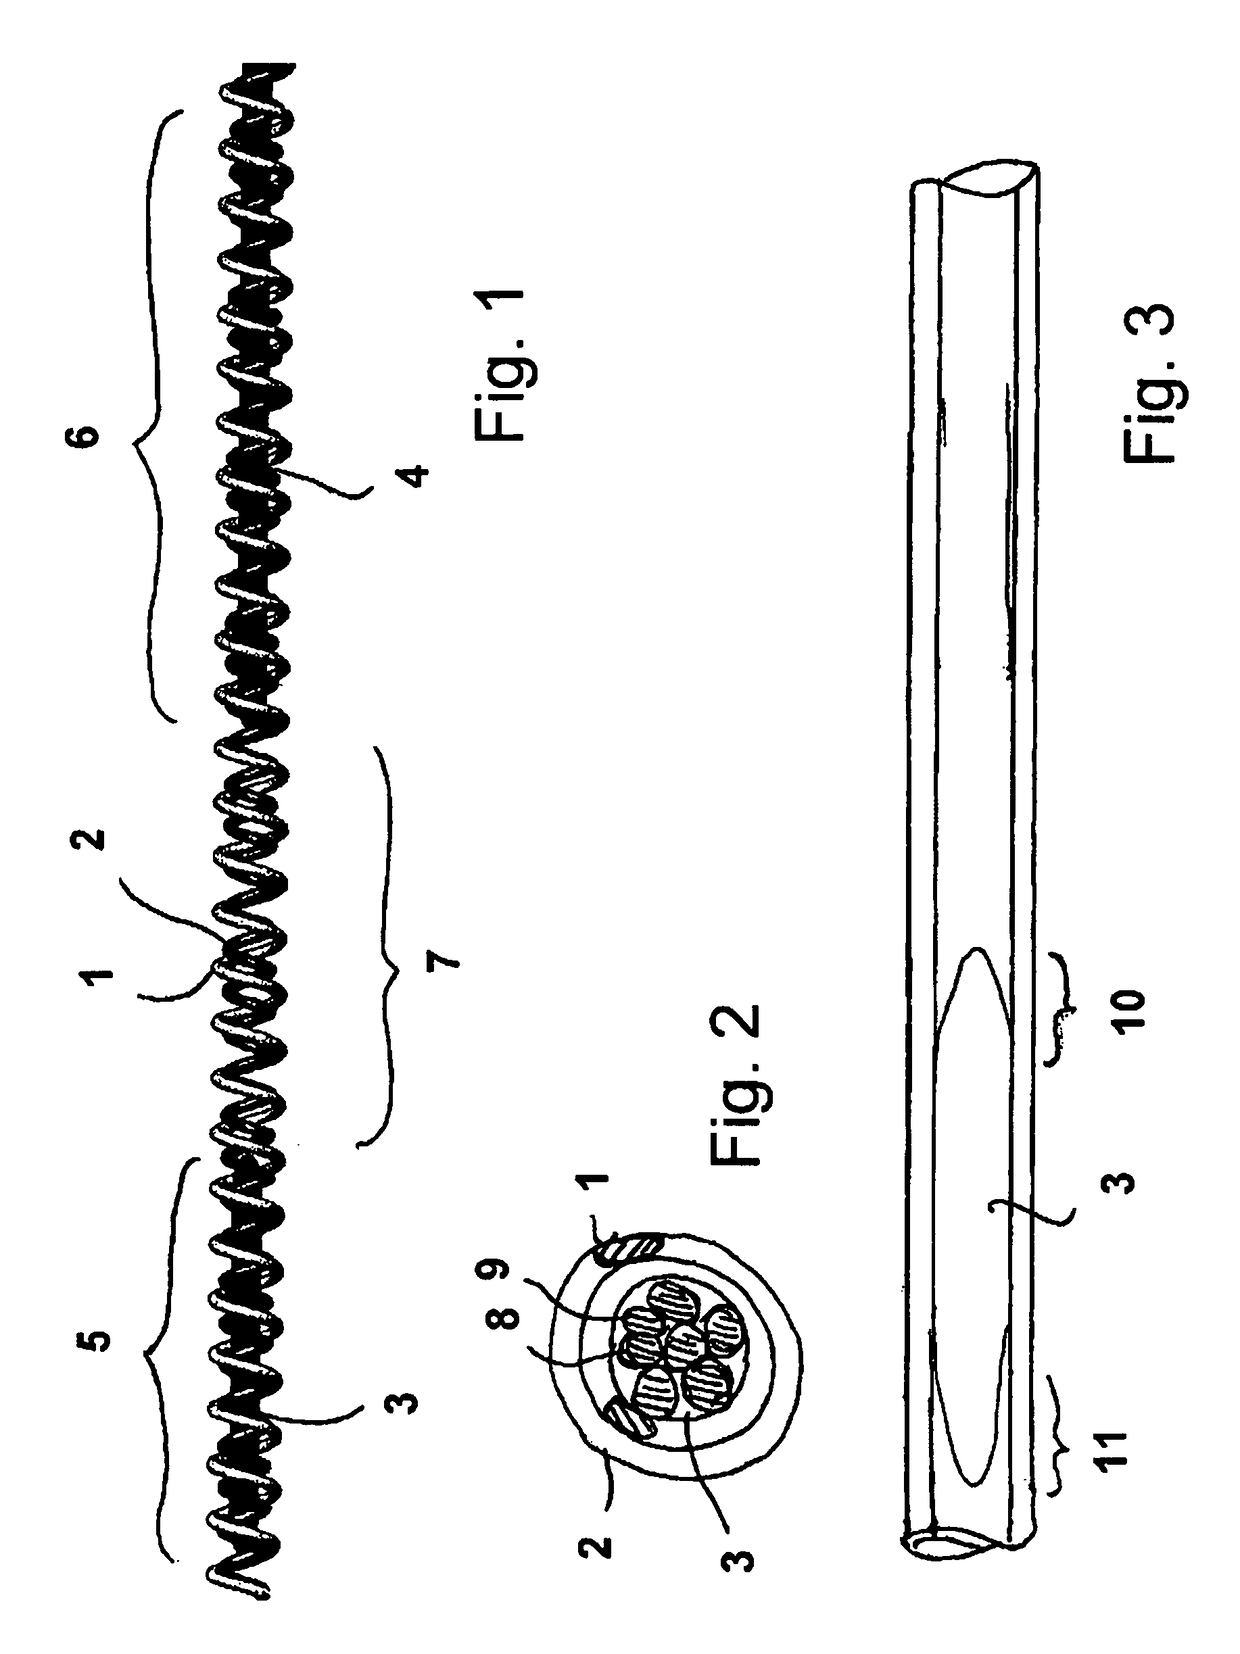 Catheter pump arrangement and flexible shaft arrangement having a core